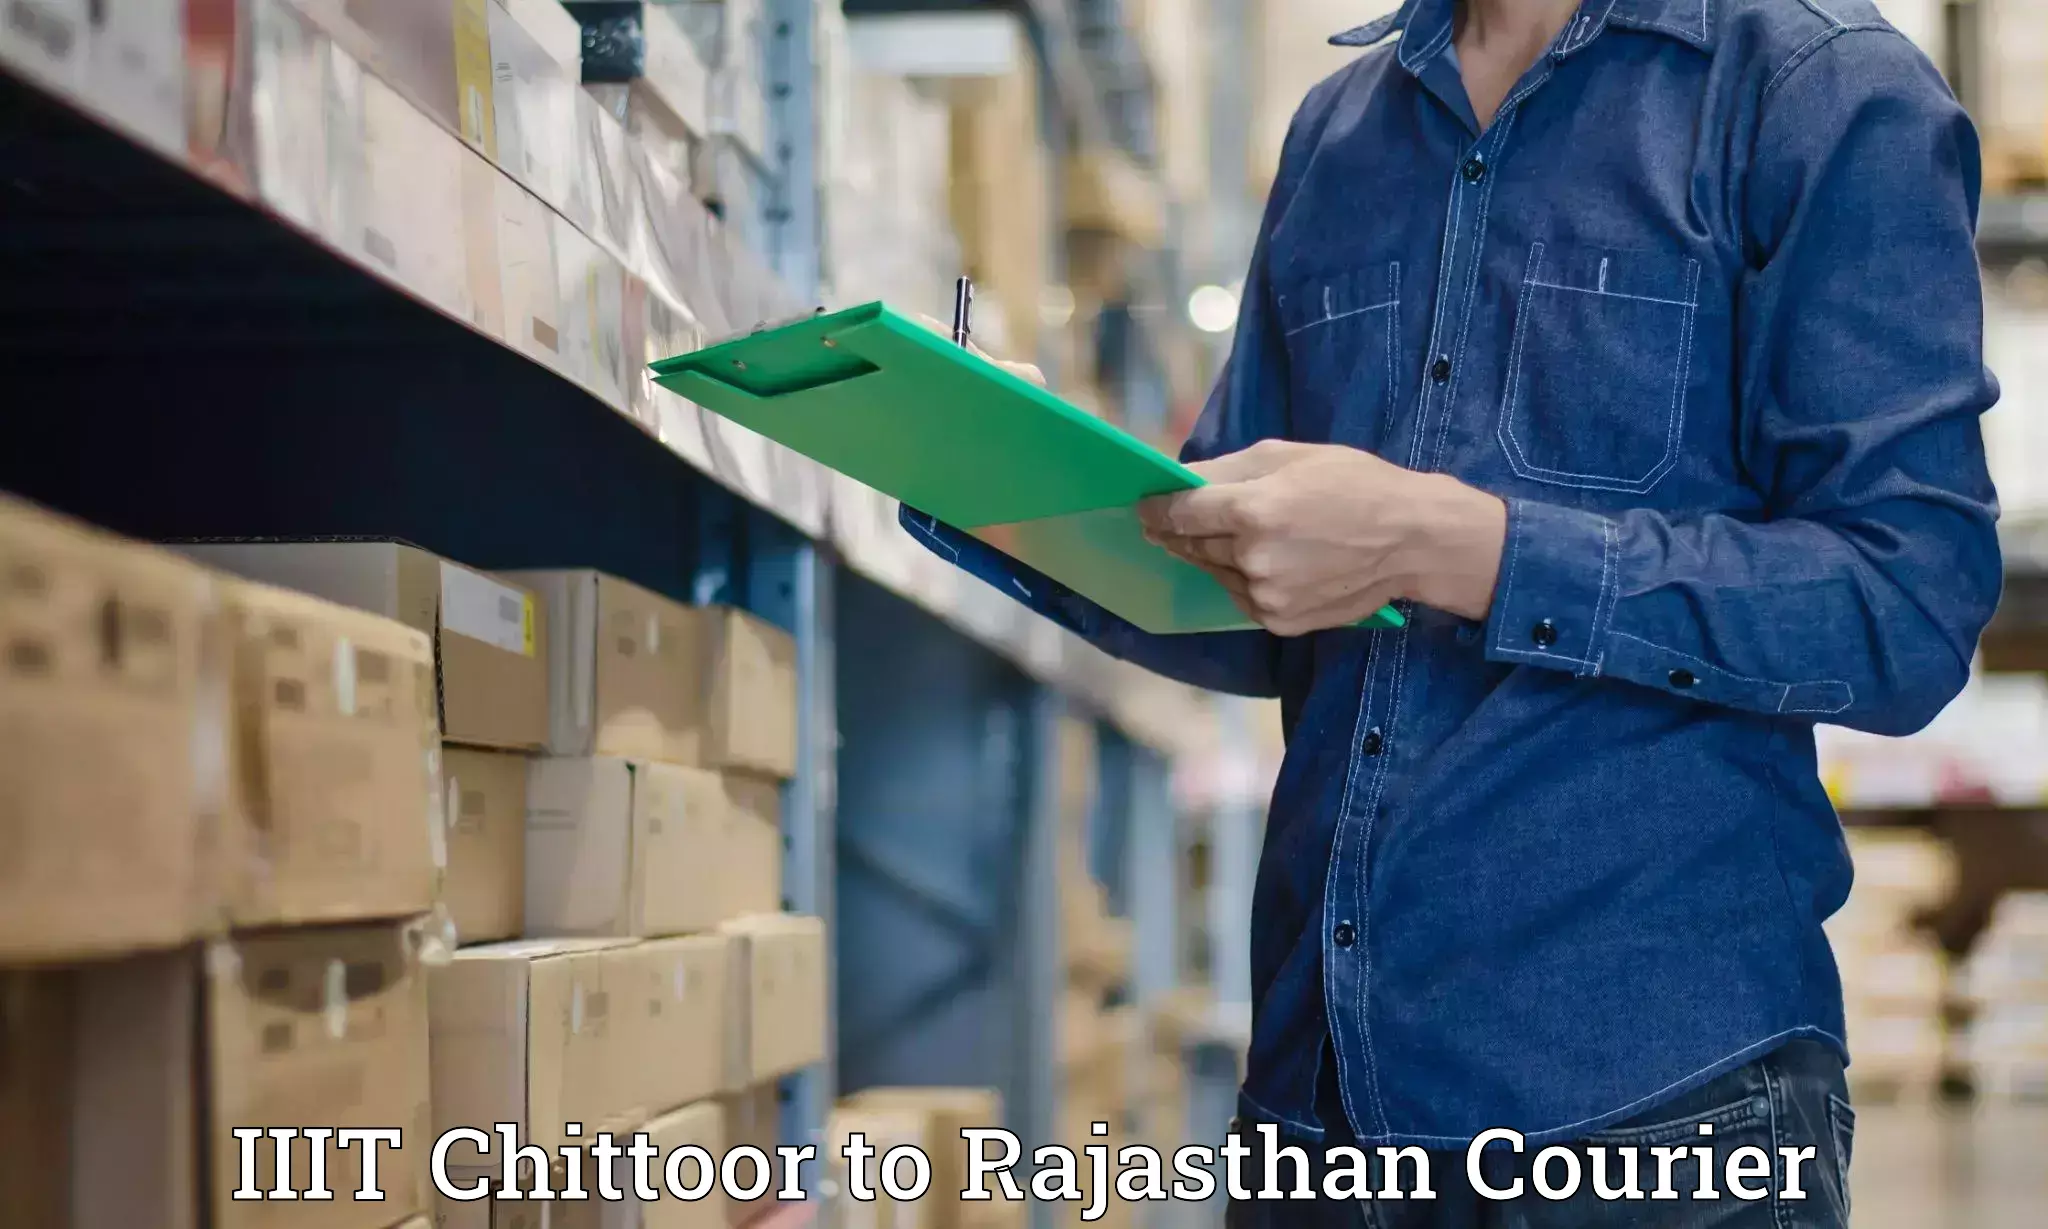 Cash on delivery service IIIT Chittoor to Shri Dungargarh